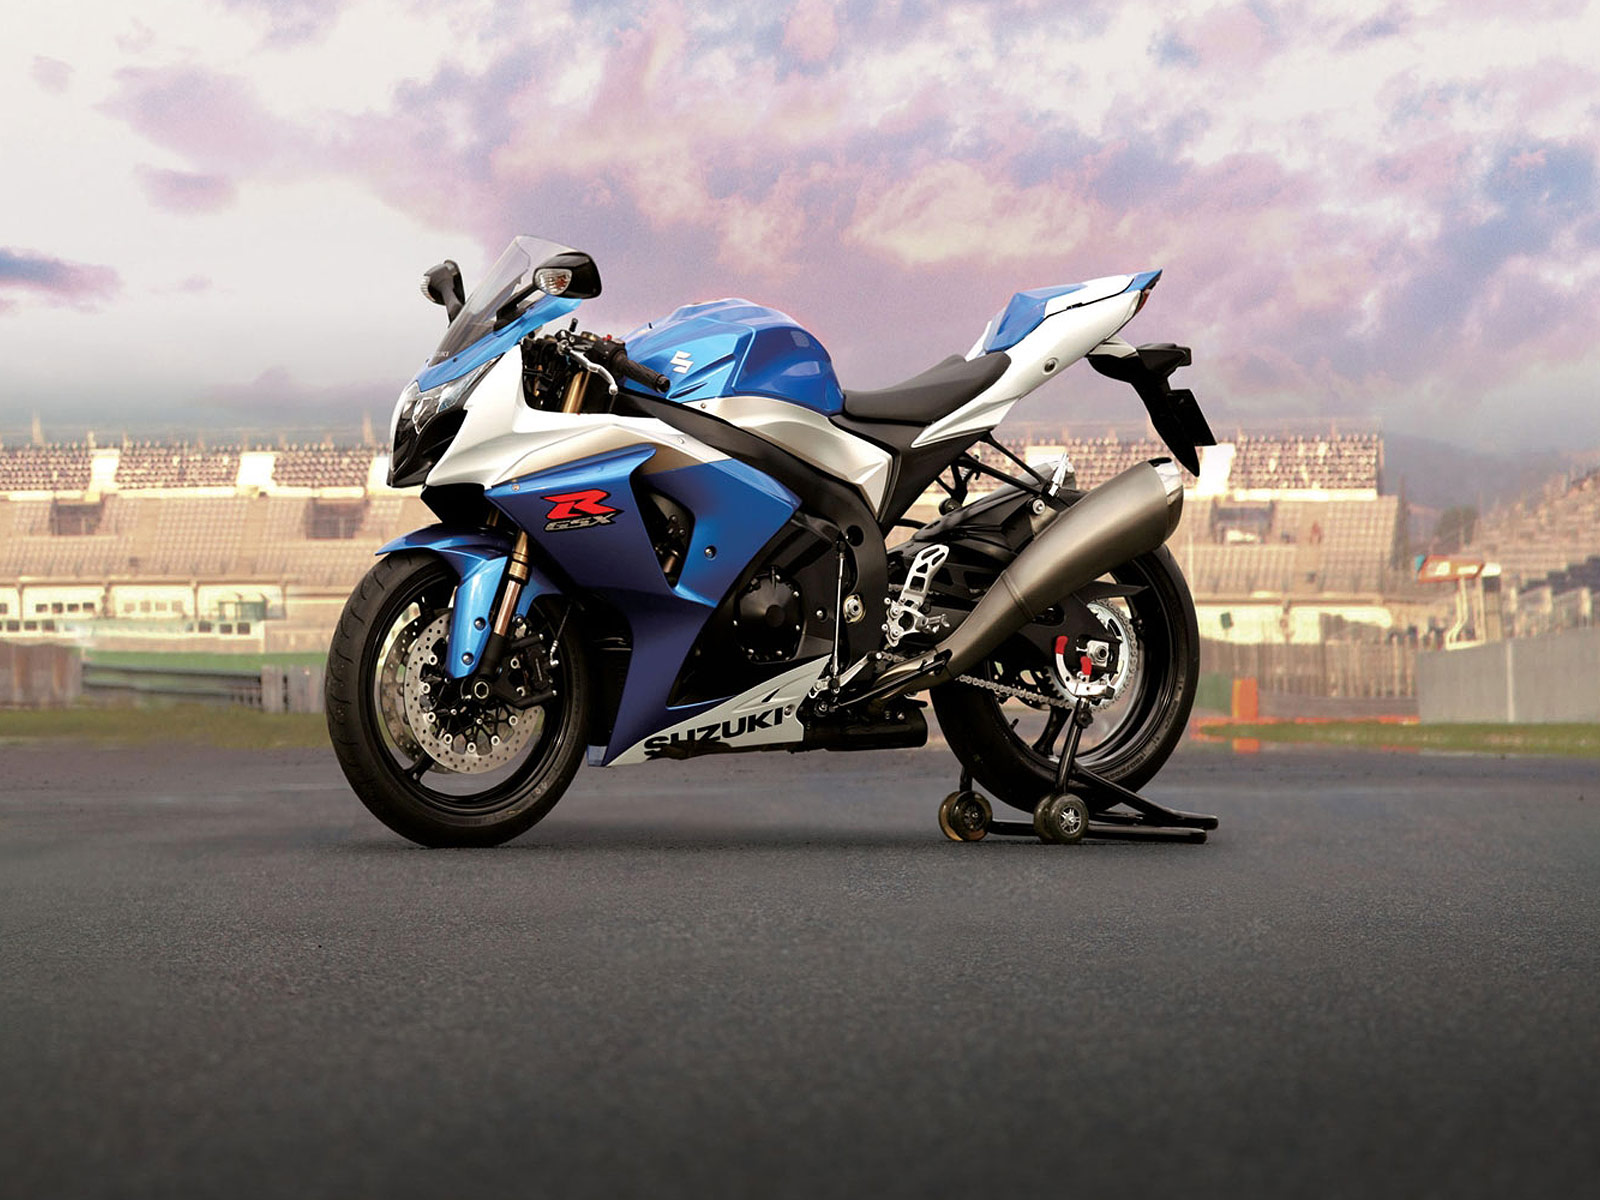 2010 Suzuki GSX-R1000 Motorcycle | Motorcycle Wallpapers Gallery